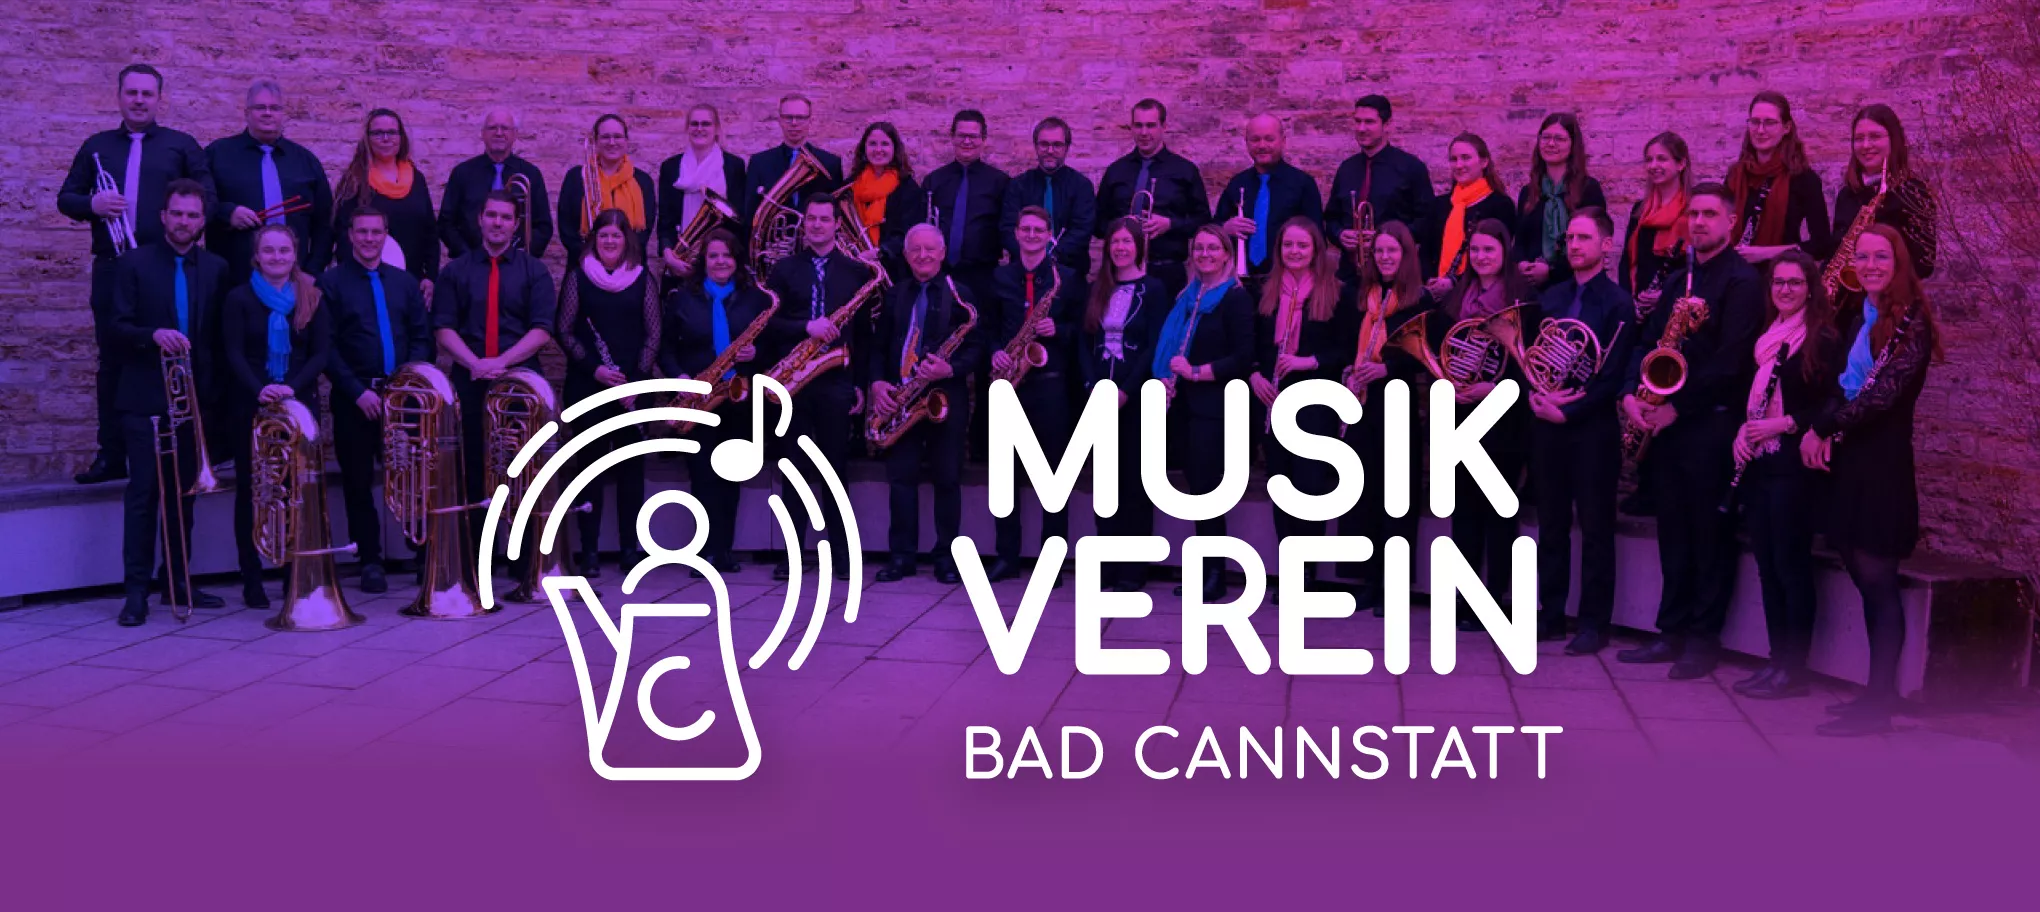 Event organiser of Spendenkonzert Musikverein Bad Cannstatt